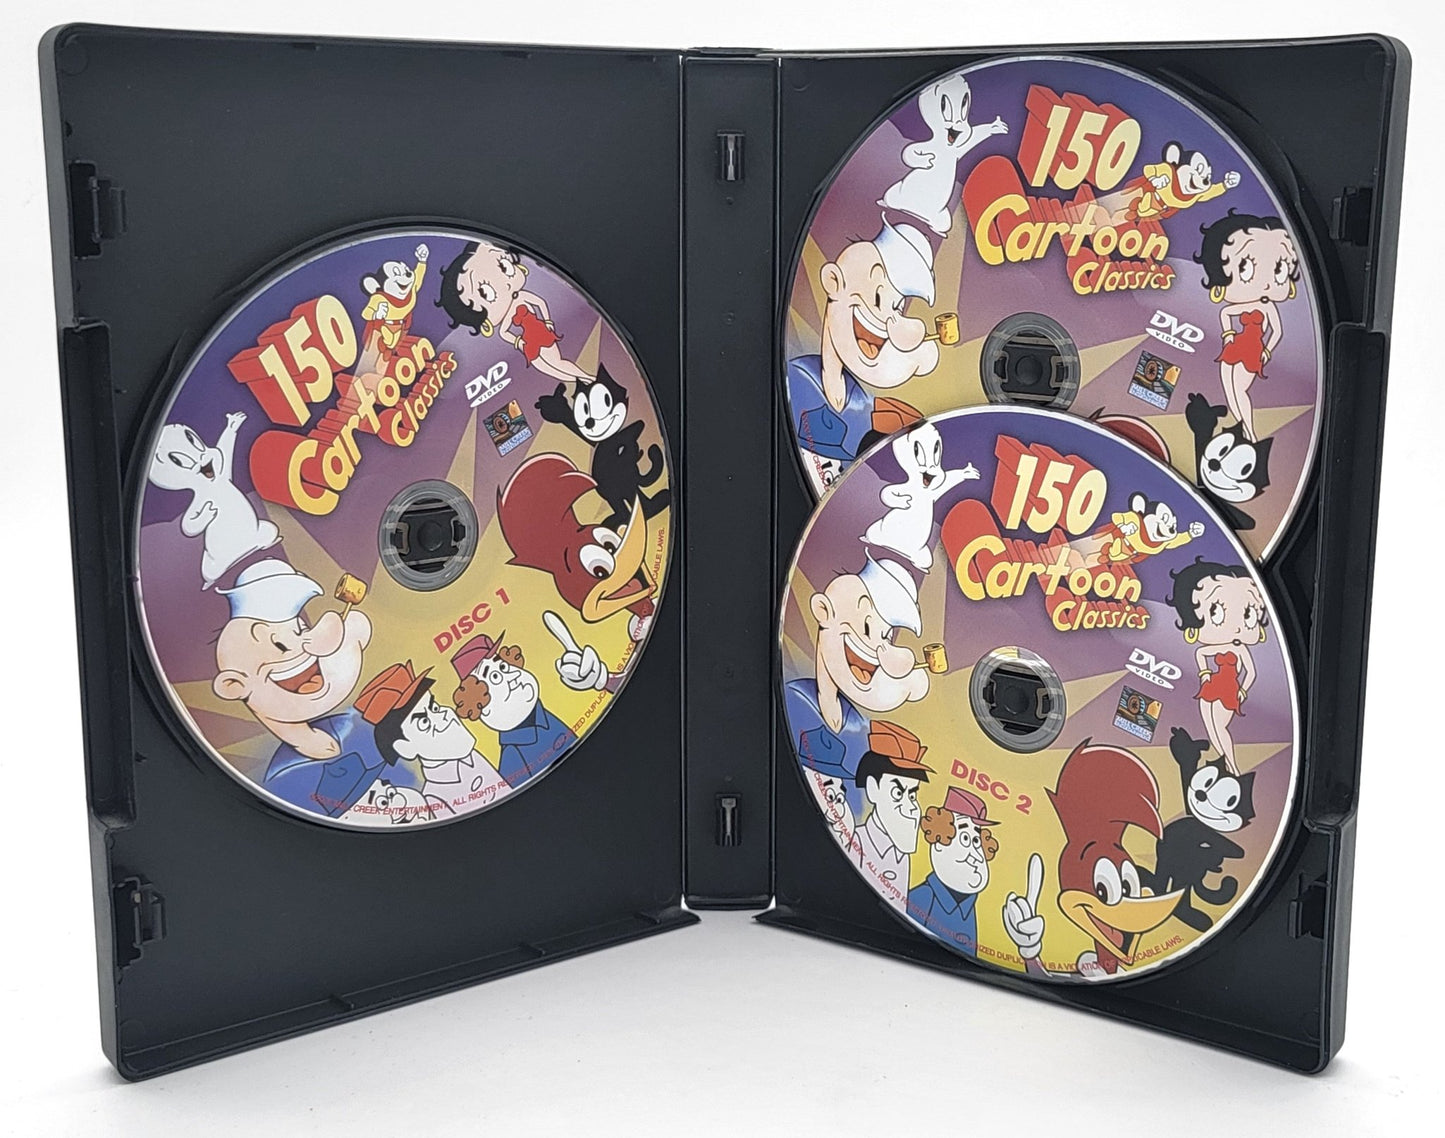 Mill Creek Entertainment - 150 Cartoon Classics | DVD | 3 Disks Set Hours of Classic Animation - DVD - Steady Bunny Shop